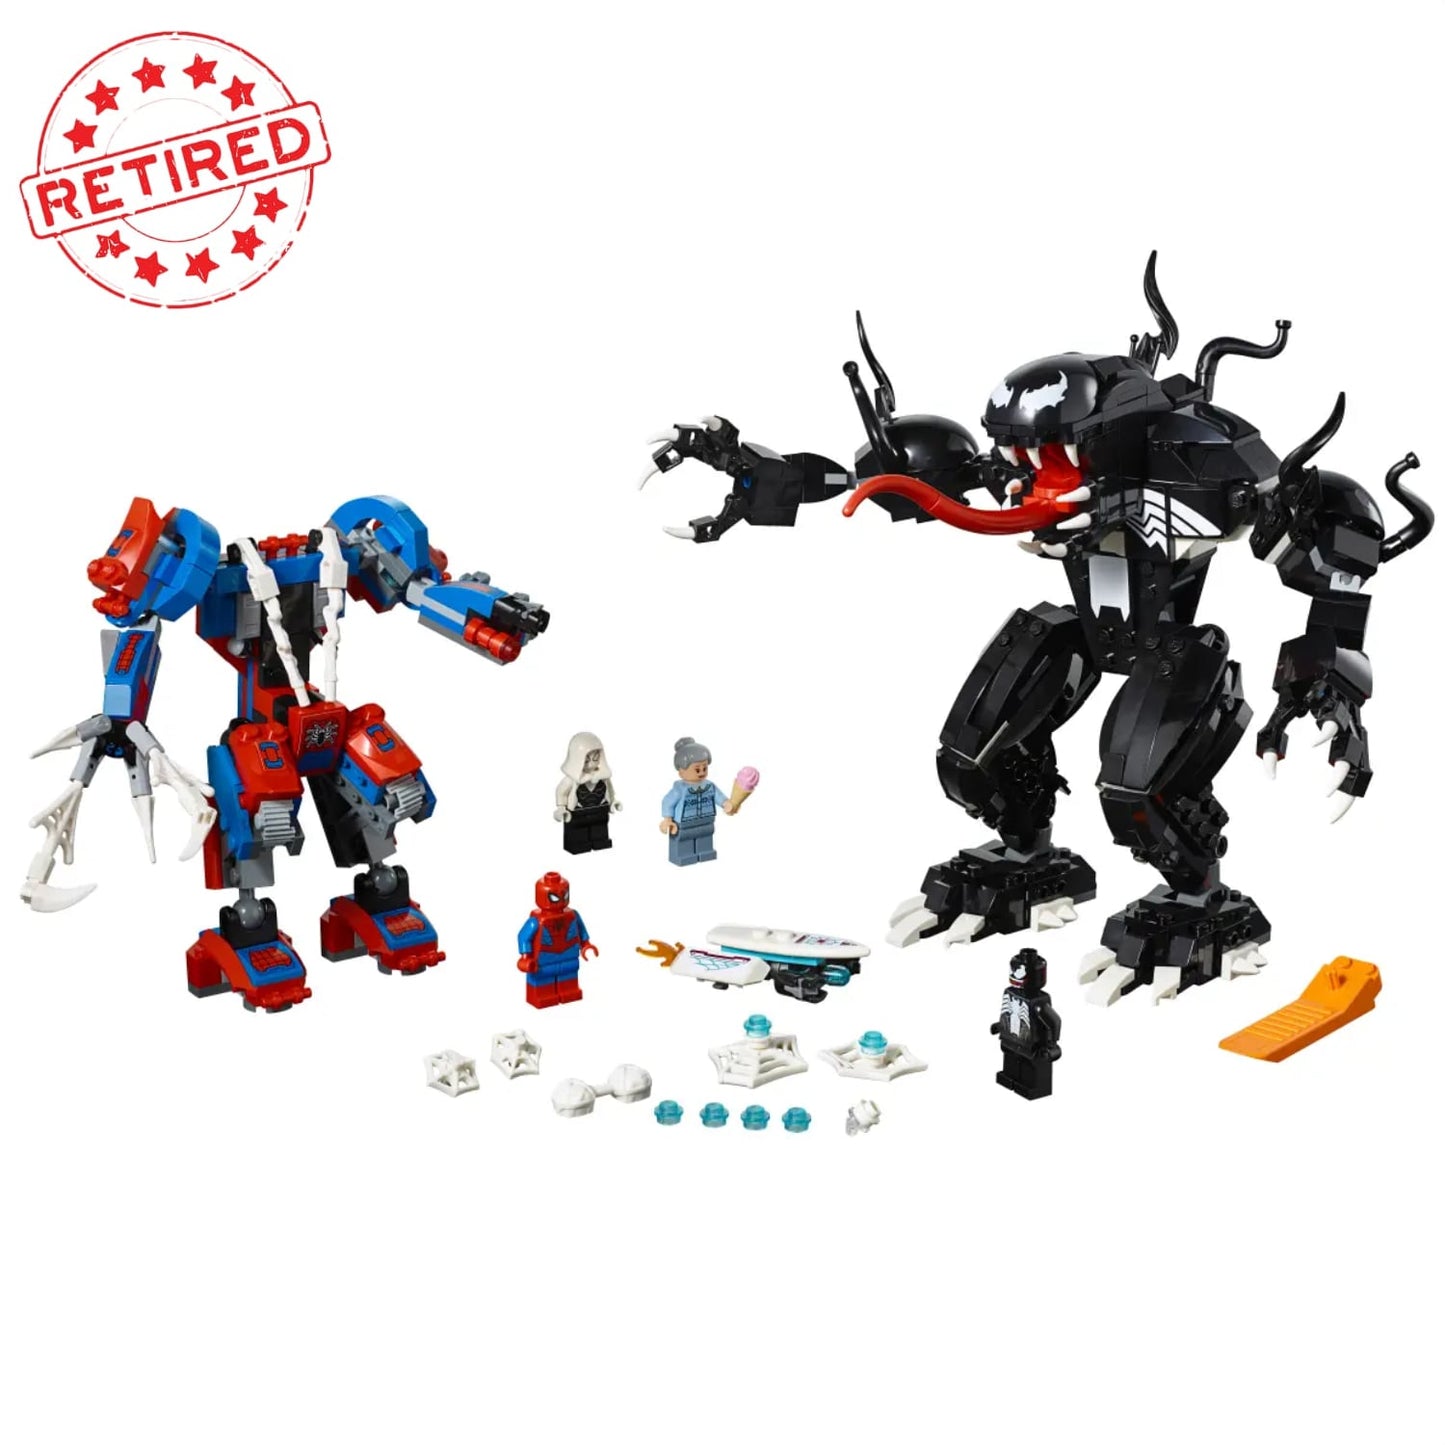 Lego 76115 Marvel Spider-Man’s Spider Mech vs. Venom